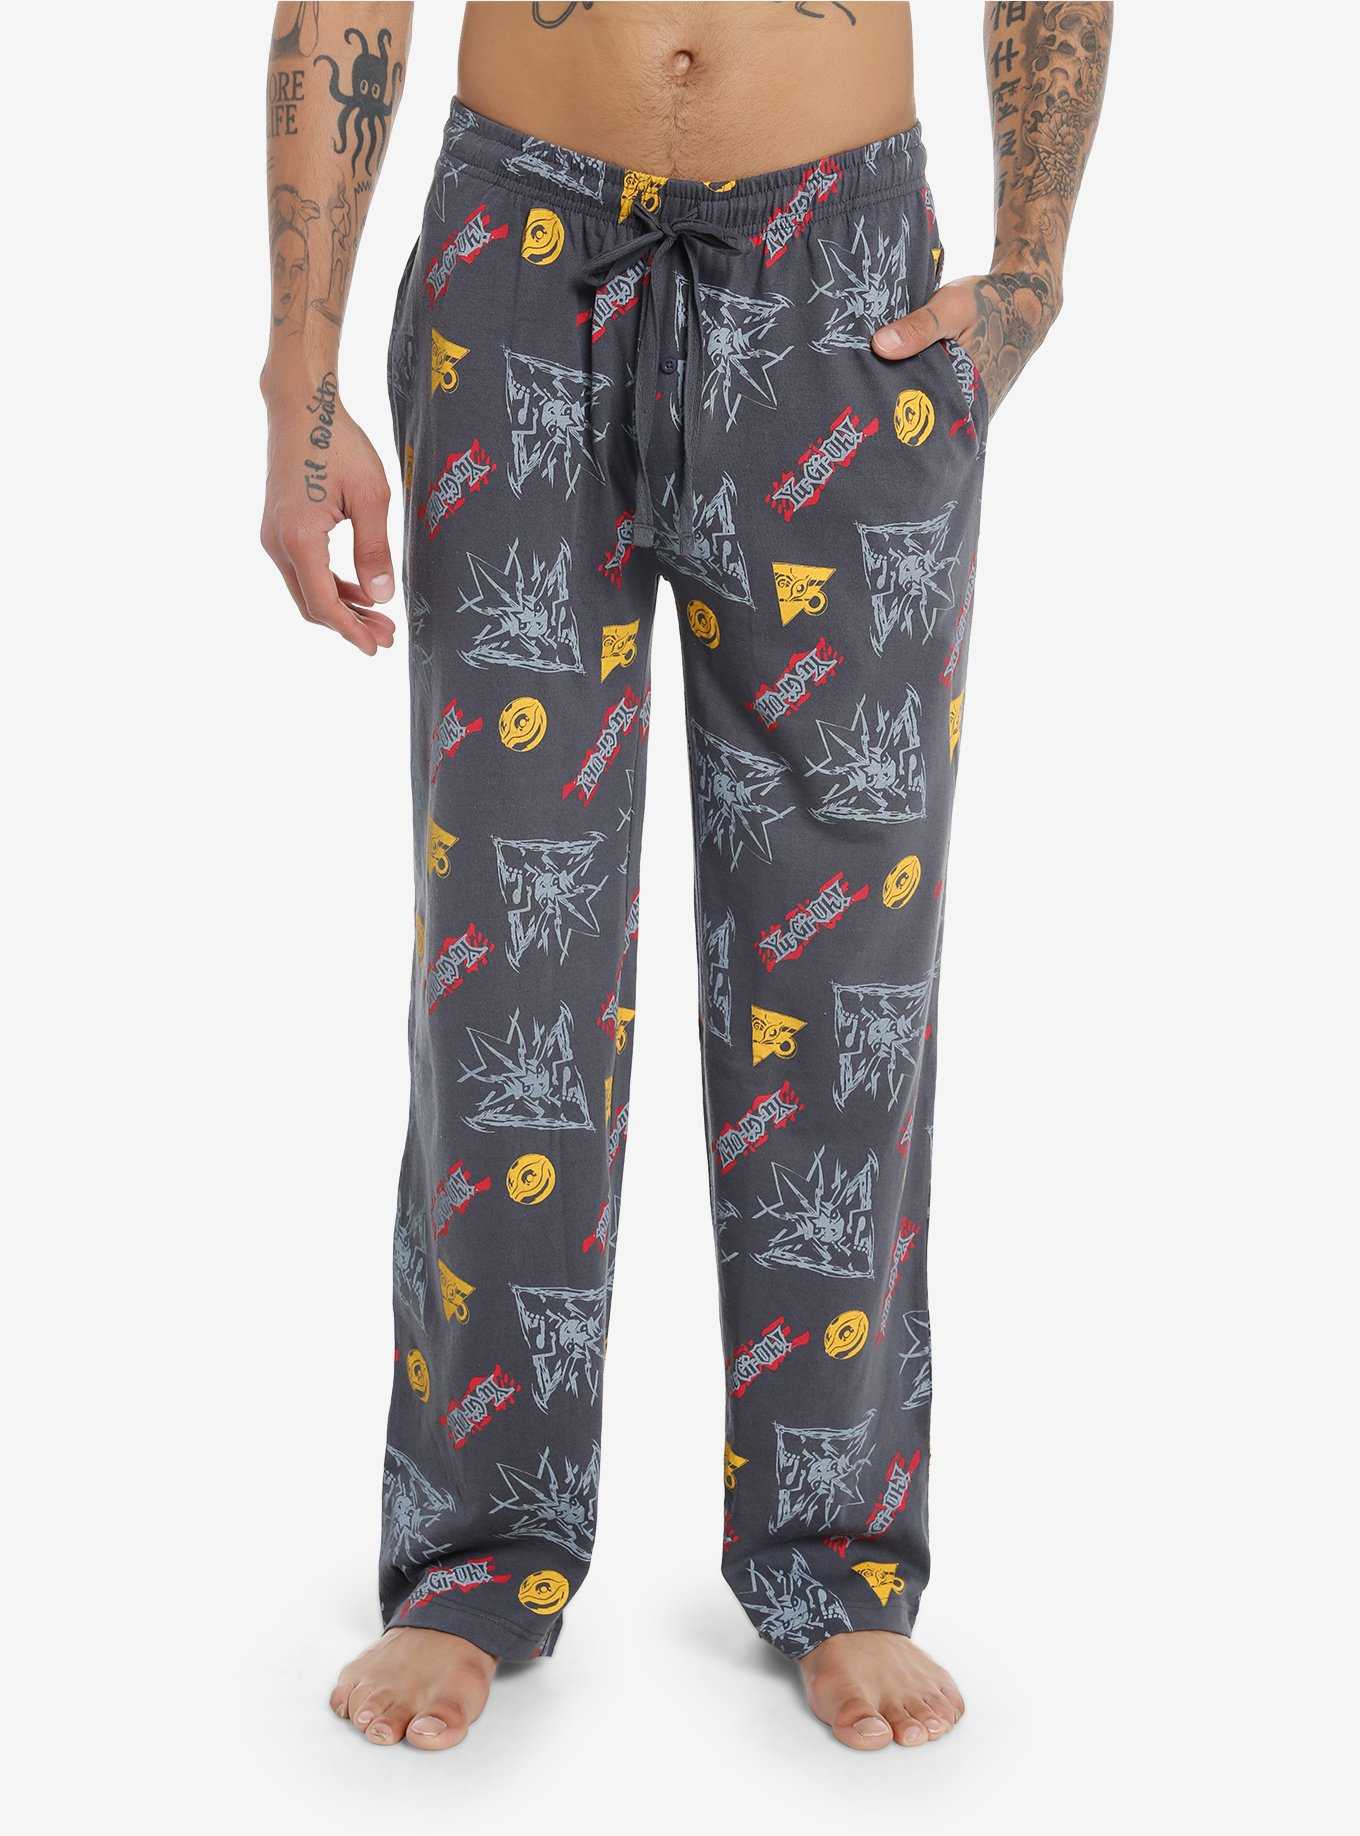 NWT BABY YODA Star Wars Pajamas Pants Women's Size S-3X Plus